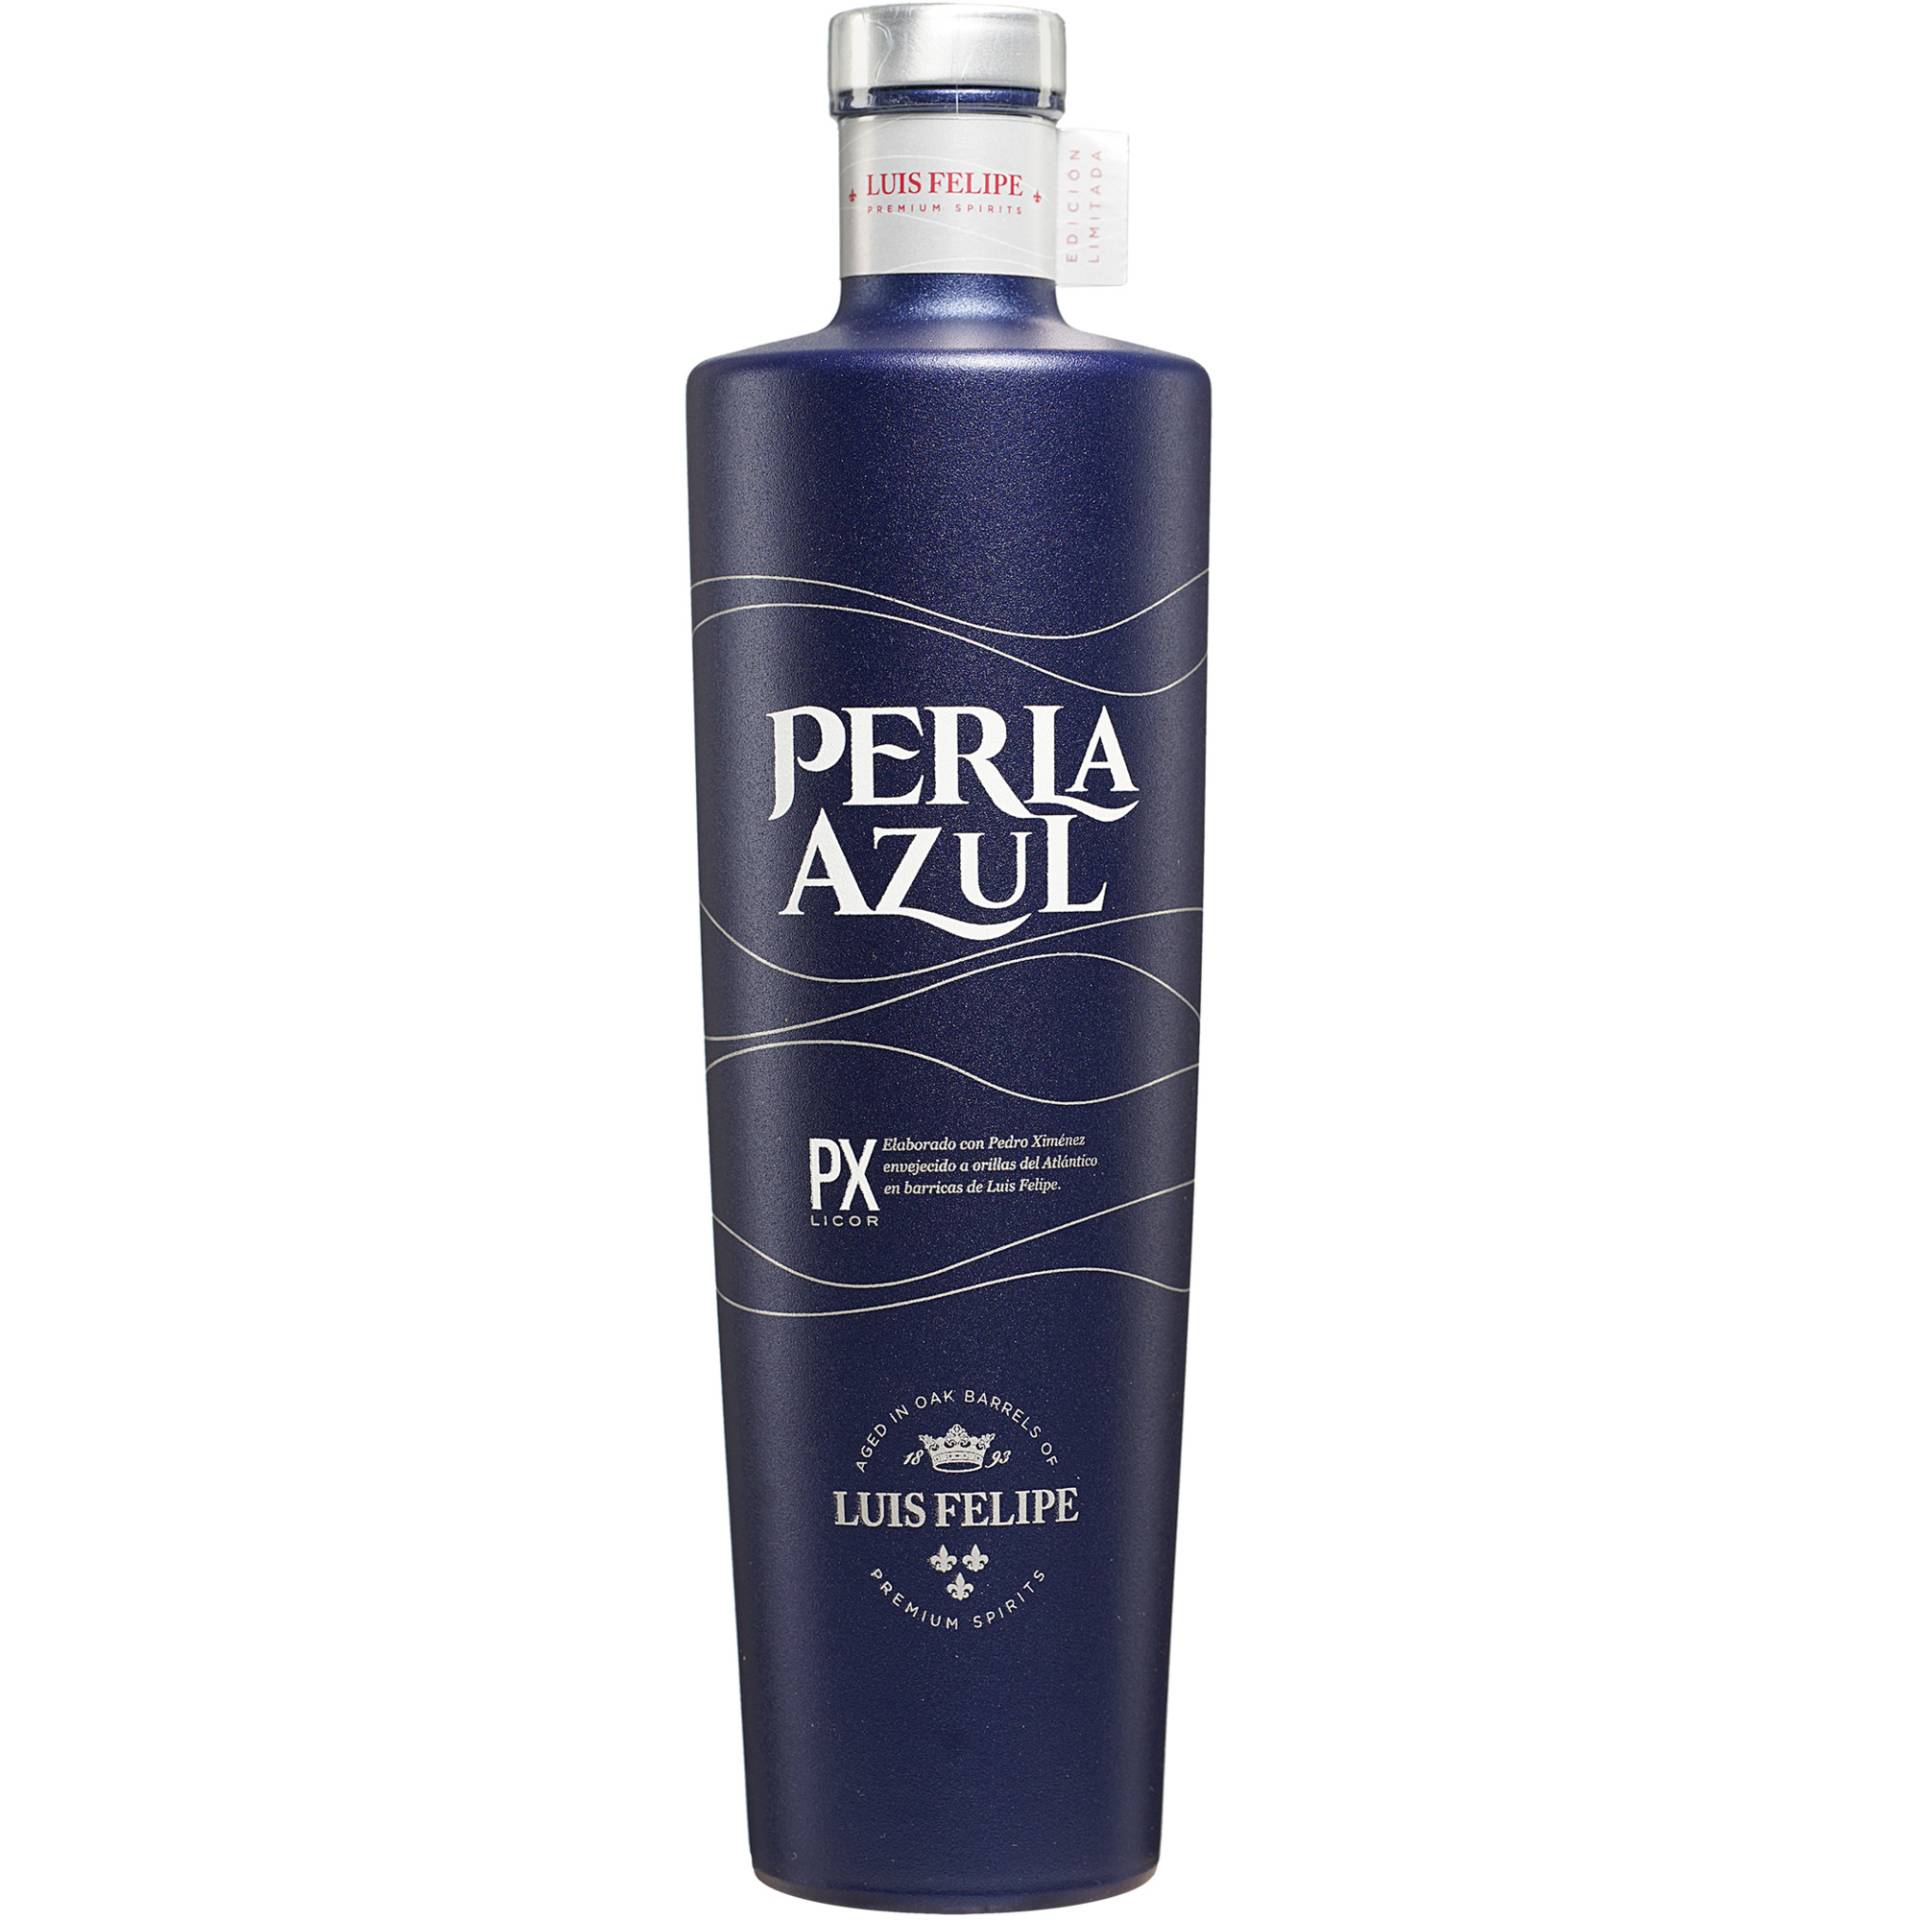 Luis Felipe Perla Azul Likör Pedro Ximénez - 0,7 L.  0.7L 15% Vol. aus Spanien von Rubio